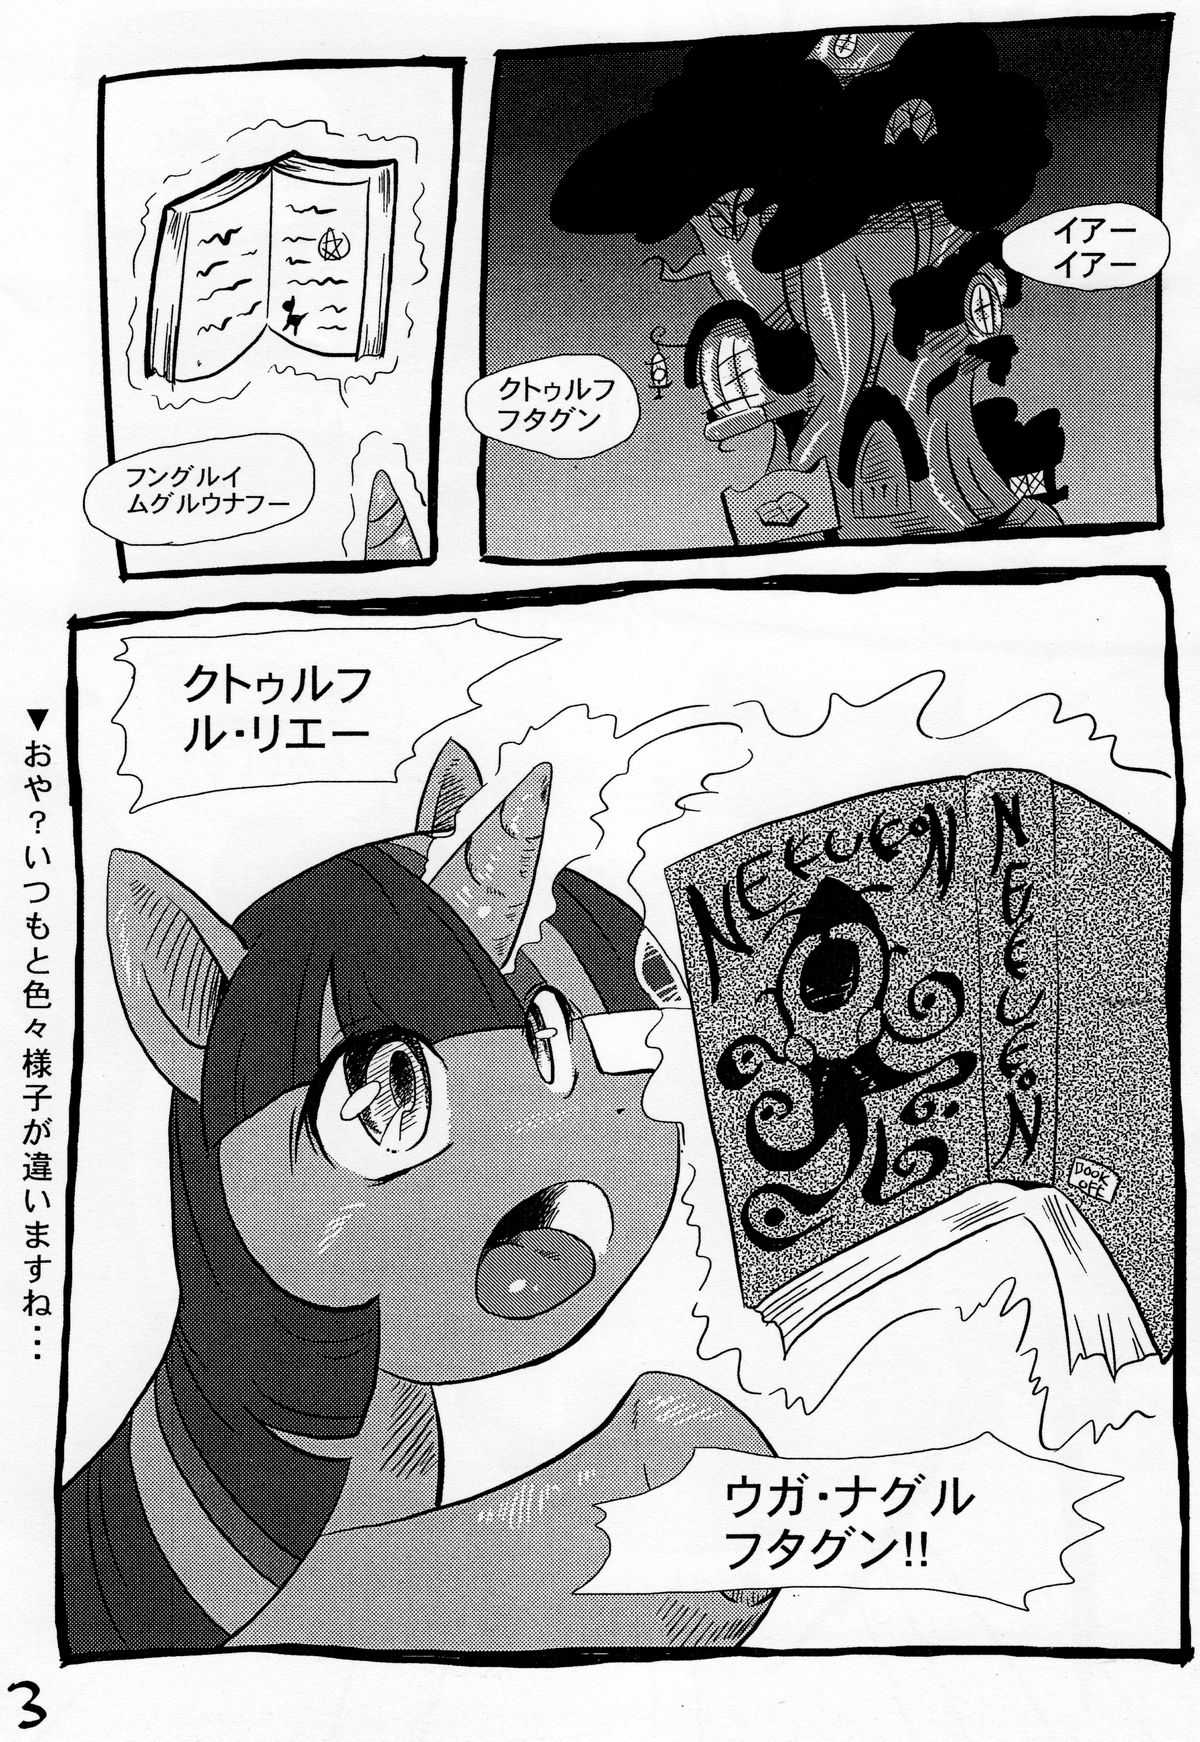 (Fur-st 3) [Two-Tone Color (Colulun)] My Little Book (My Little Pony: Friendship Is Magic) (ふぁーすと3) [ツートンカラー (こるるん)] My Little Book (マイリトルポニー: Friendship Is Magic)